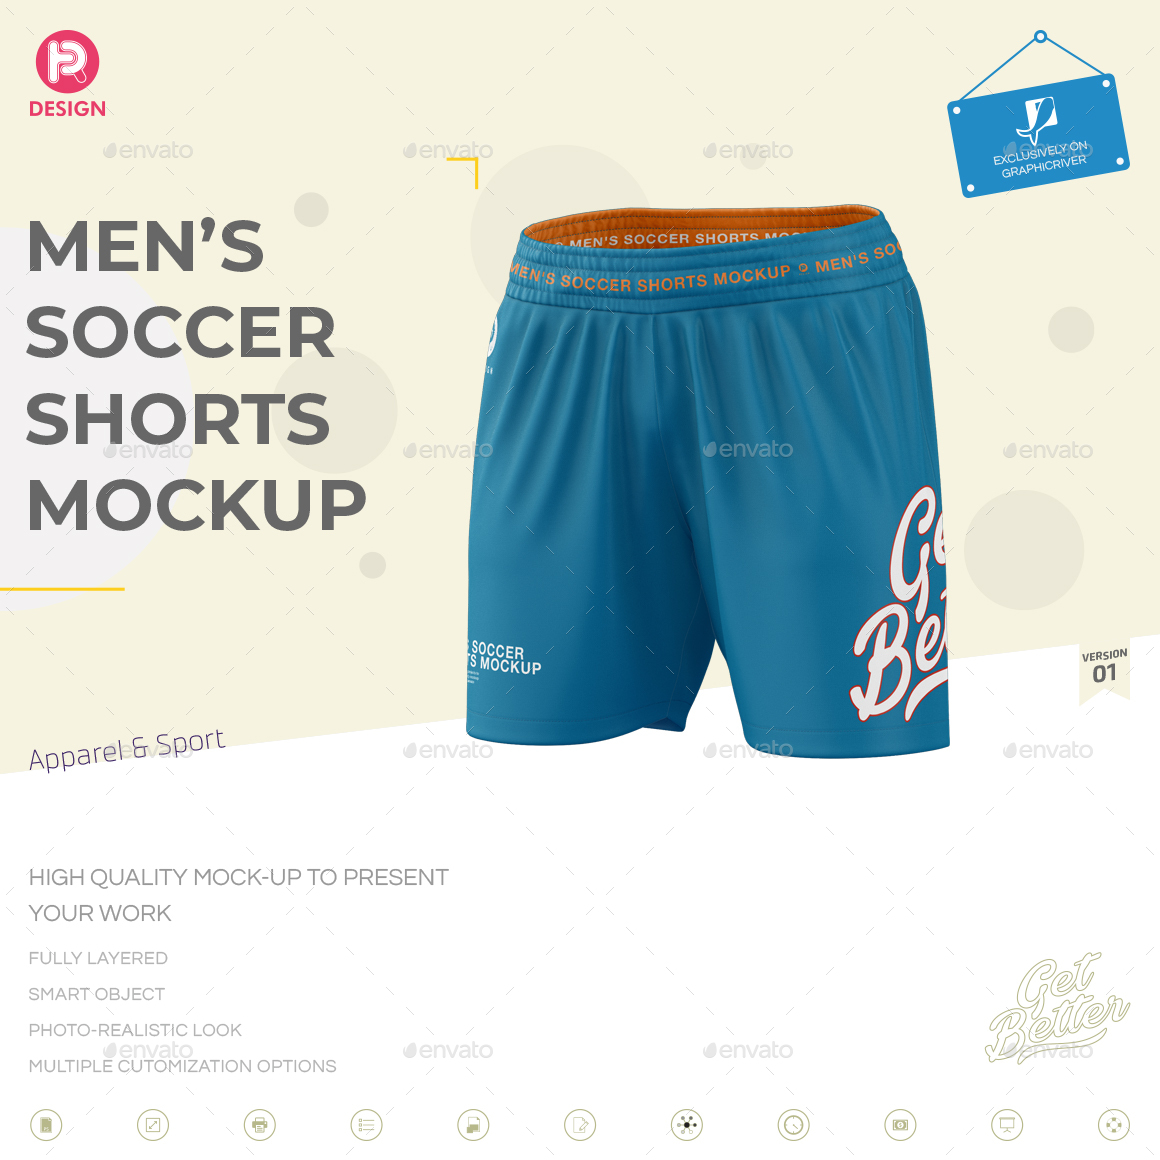 Men's Soccer Shorts Mockup V1, Graphics | GraphicRiver